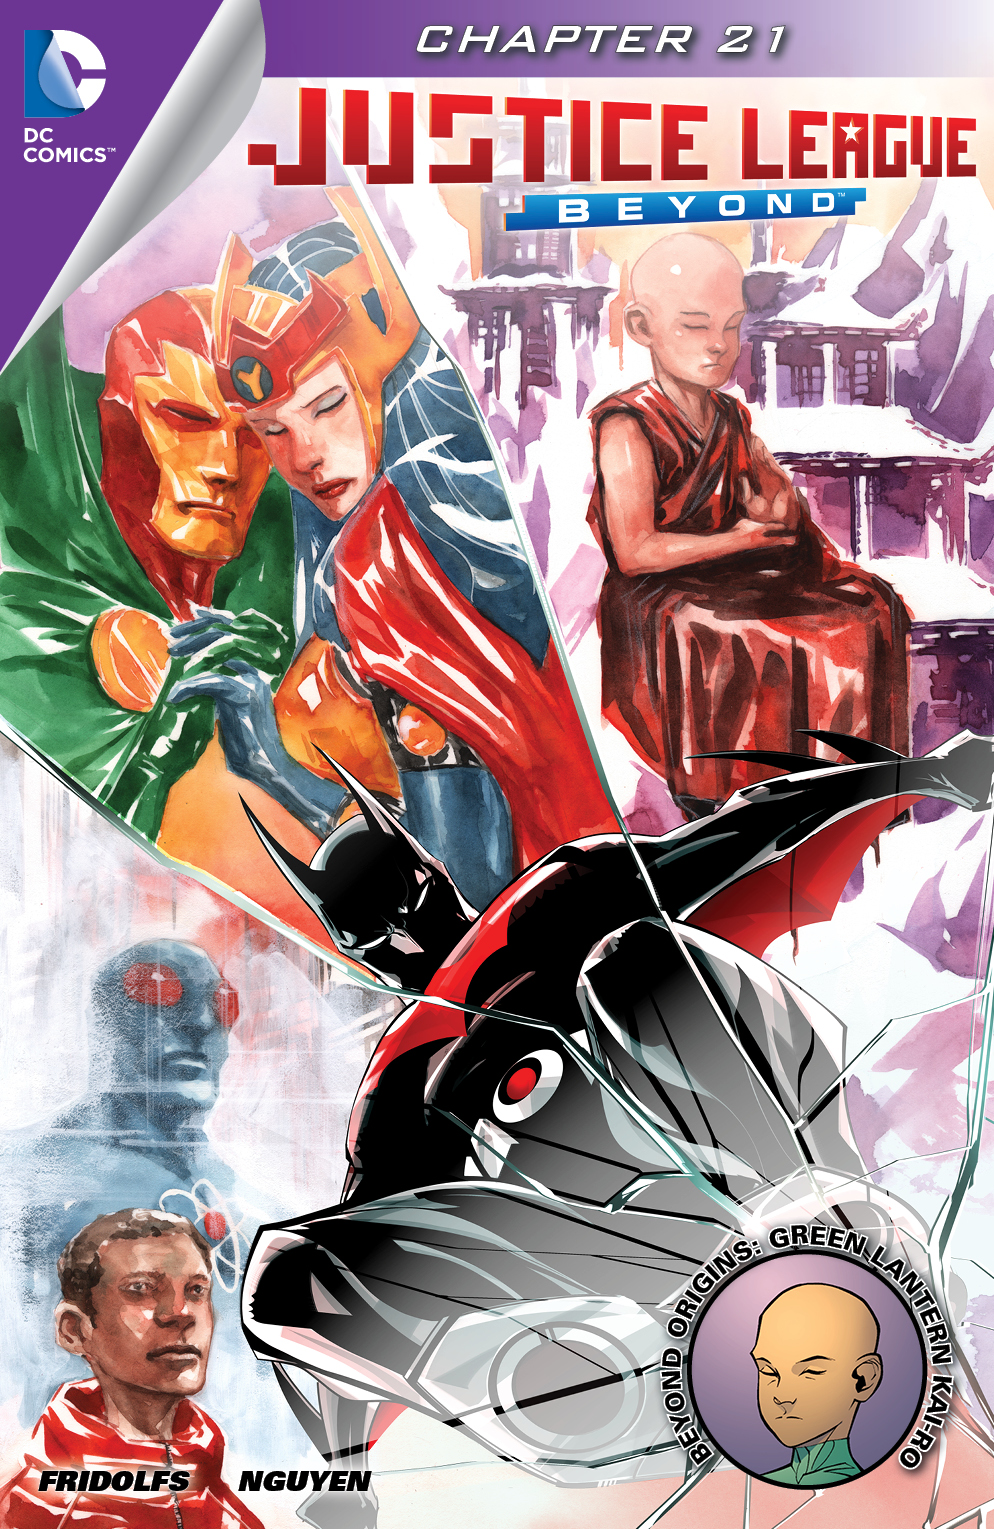 Justice League Beyond #21 preview images